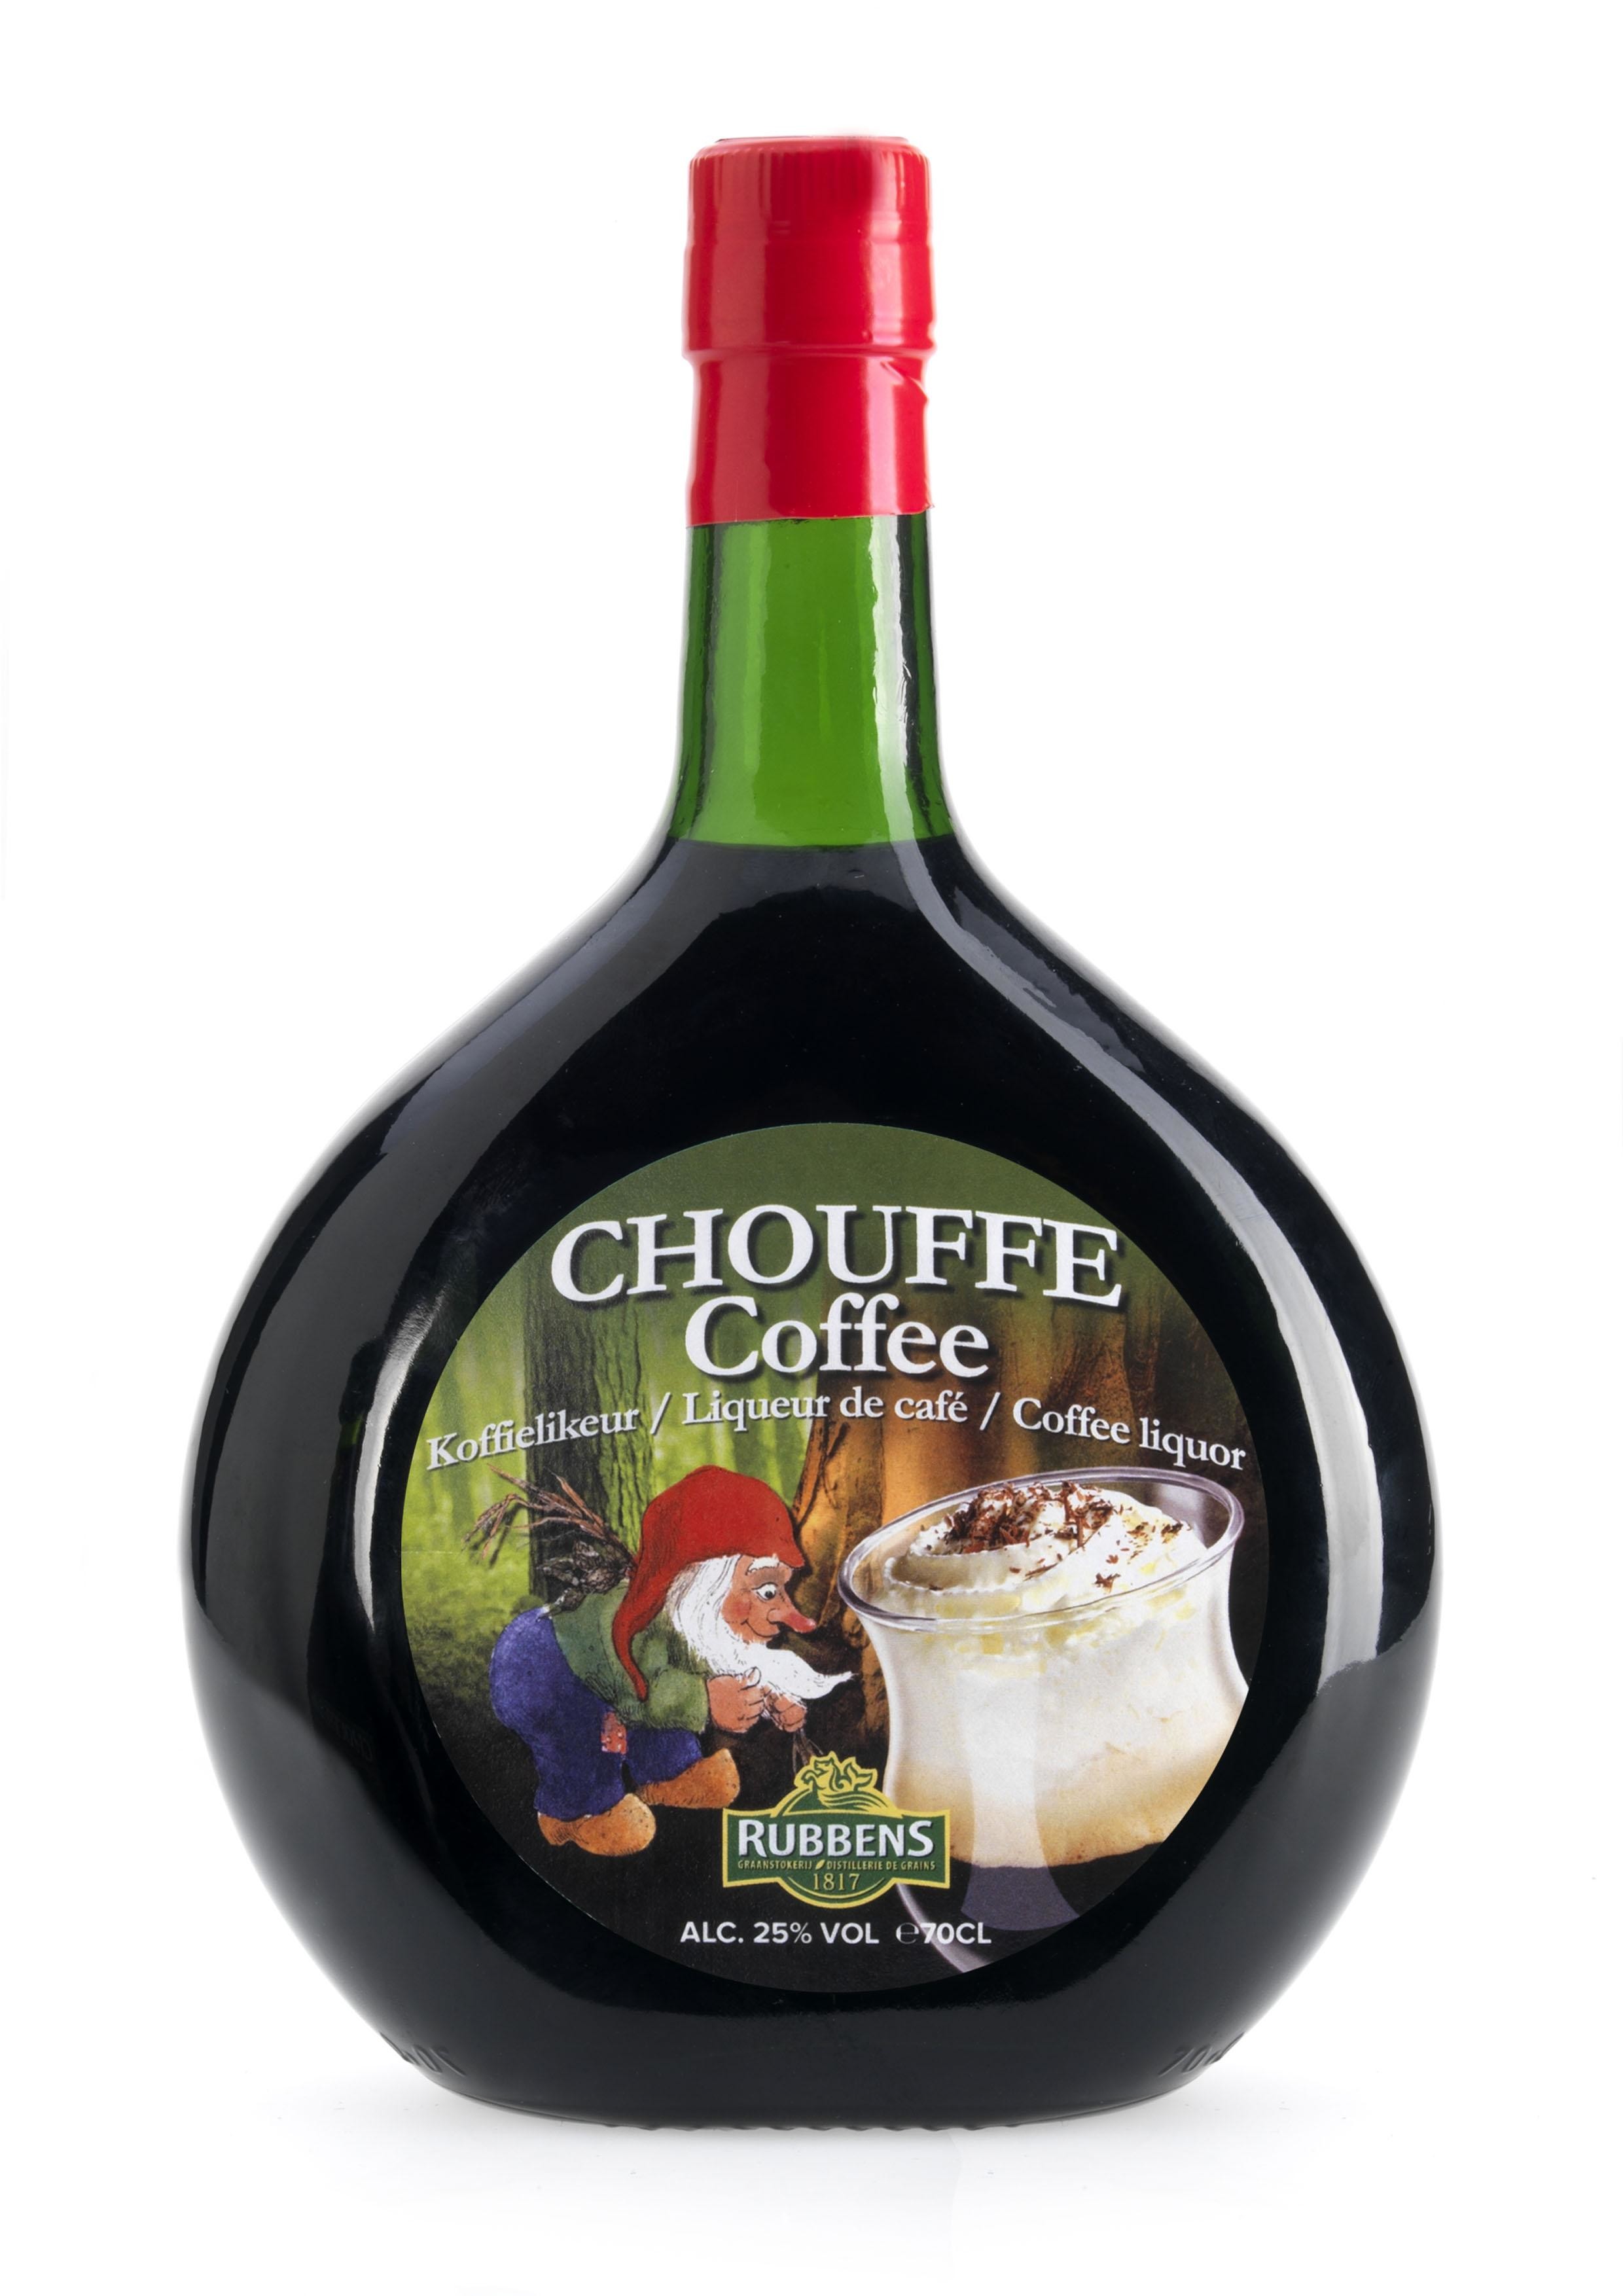 Chouffe coffee 70cl 25%